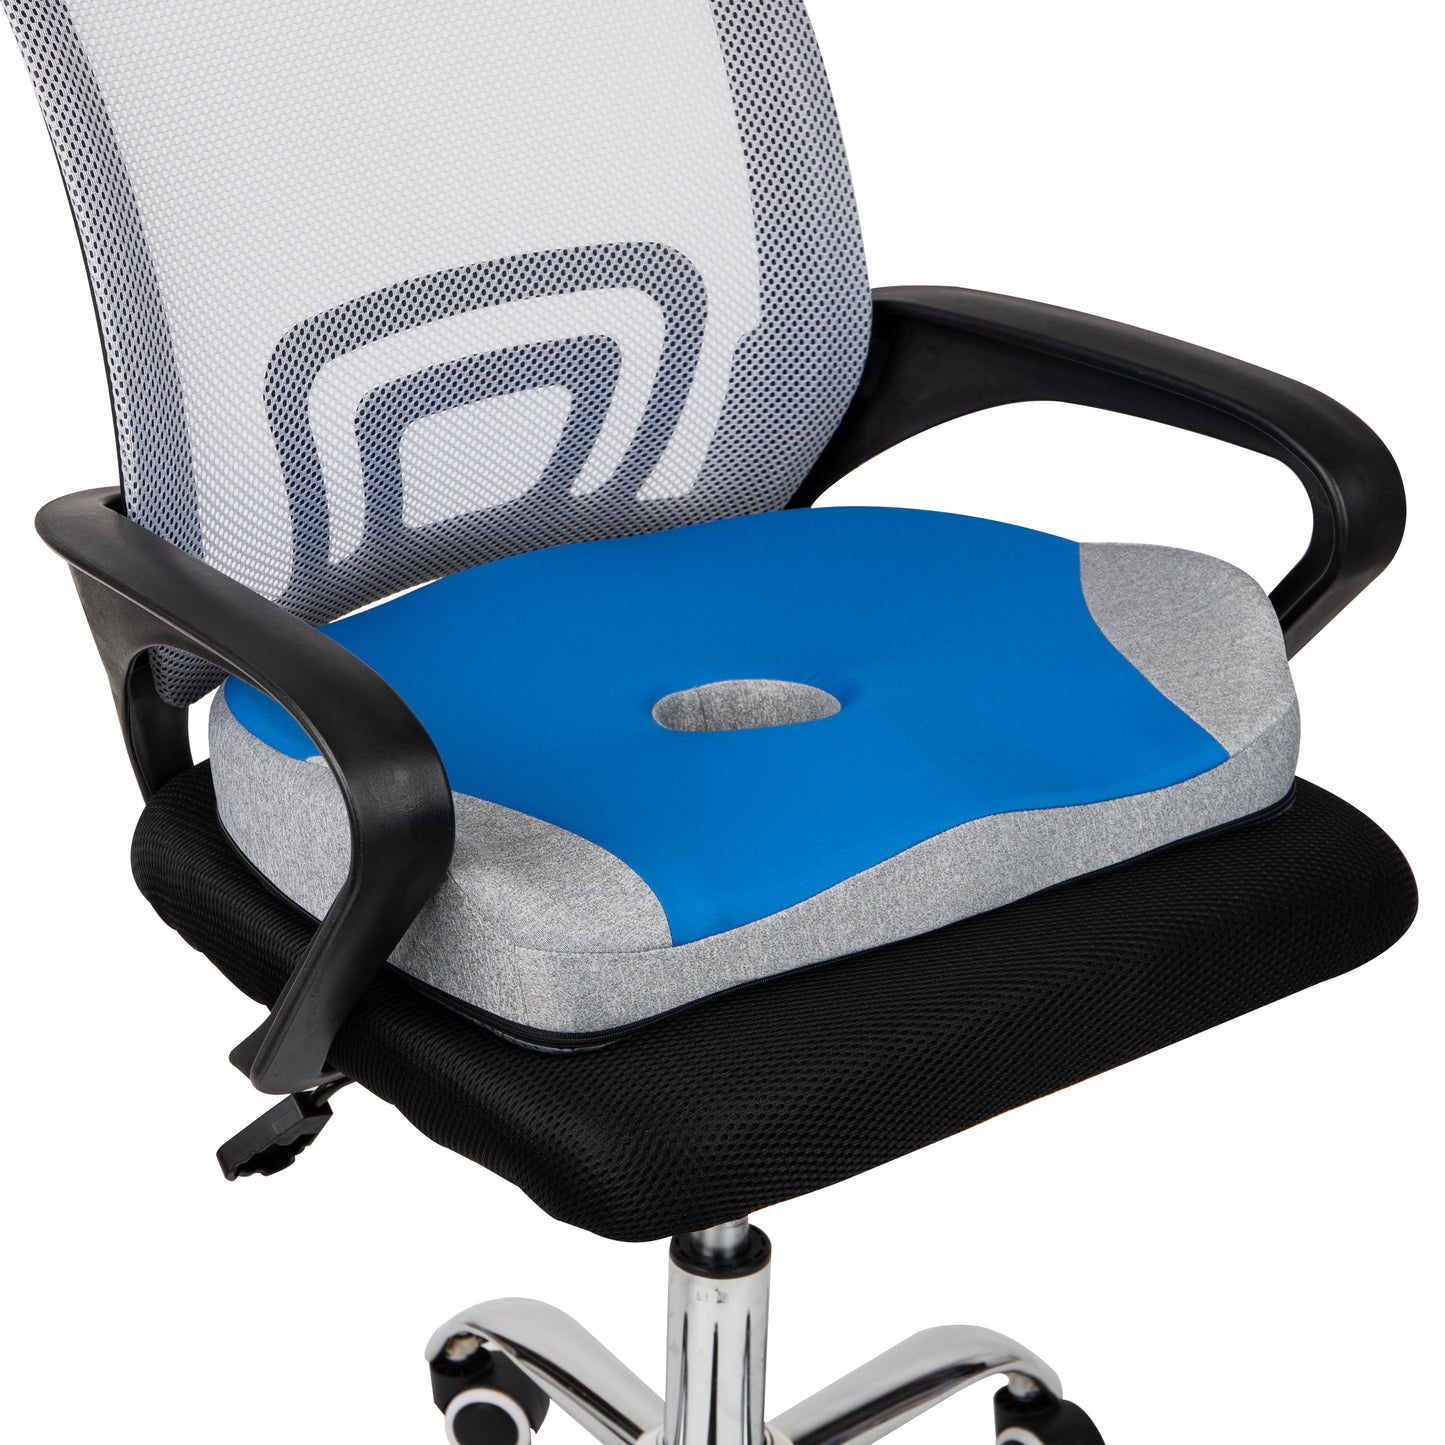 Gel Seat Cushion, Pressure Relief with Non-Slip Cover Ergonomics Chair  Cushion